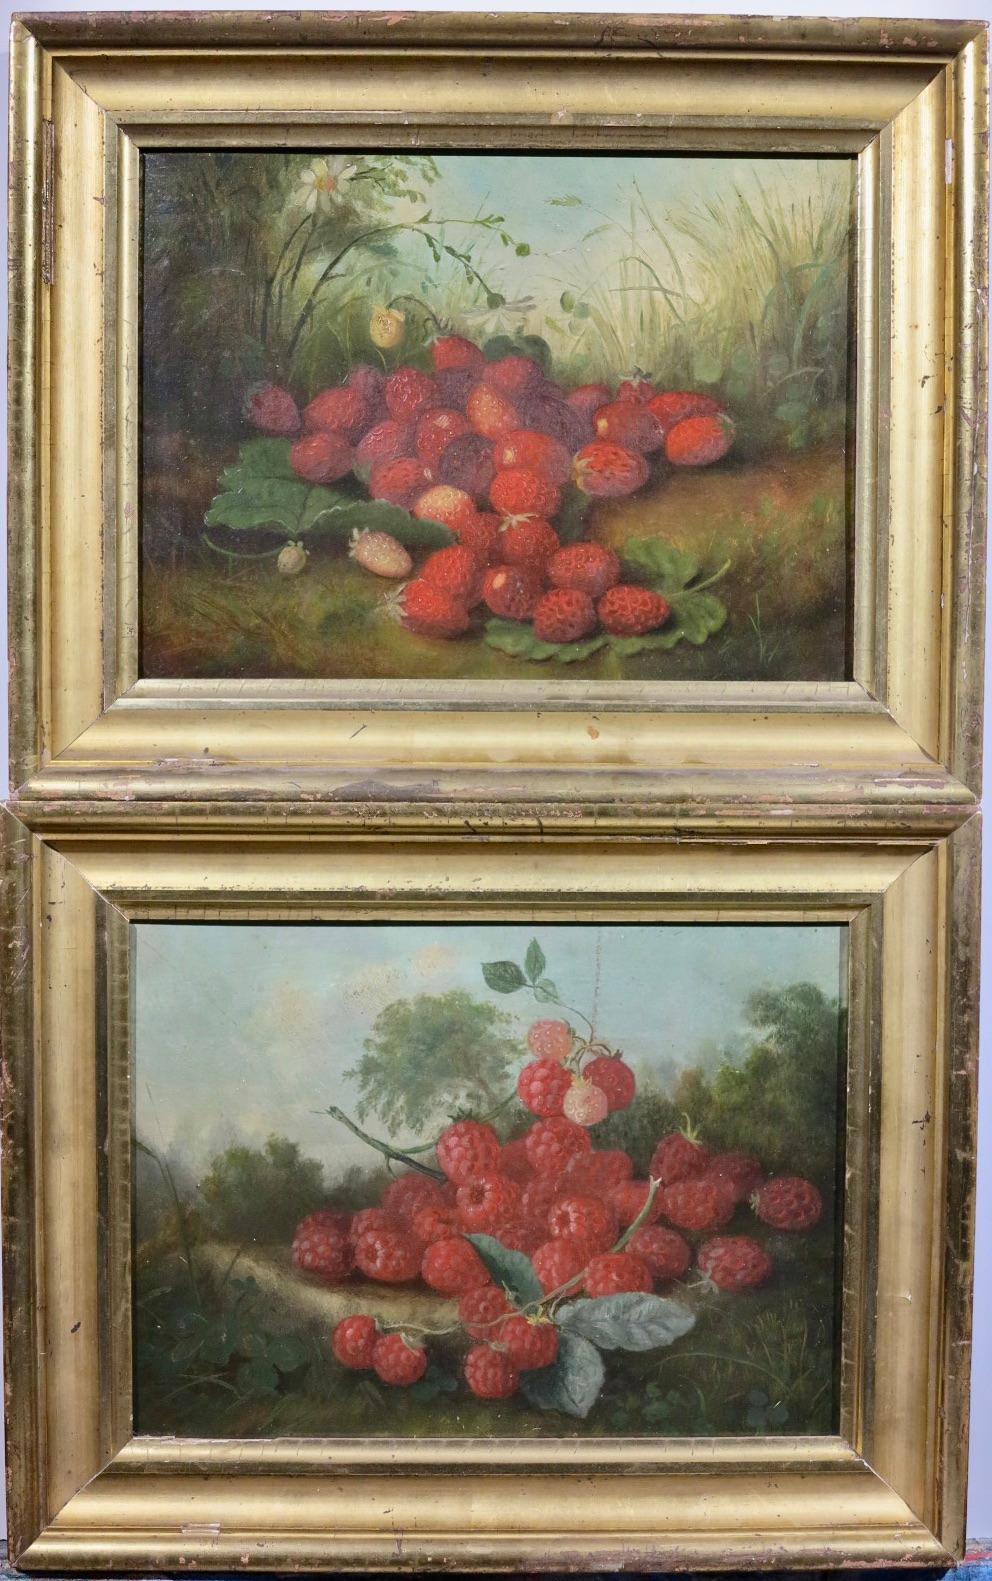 Unknown Still-Life Painting - Hudson River School era fruit still life landscape paintings